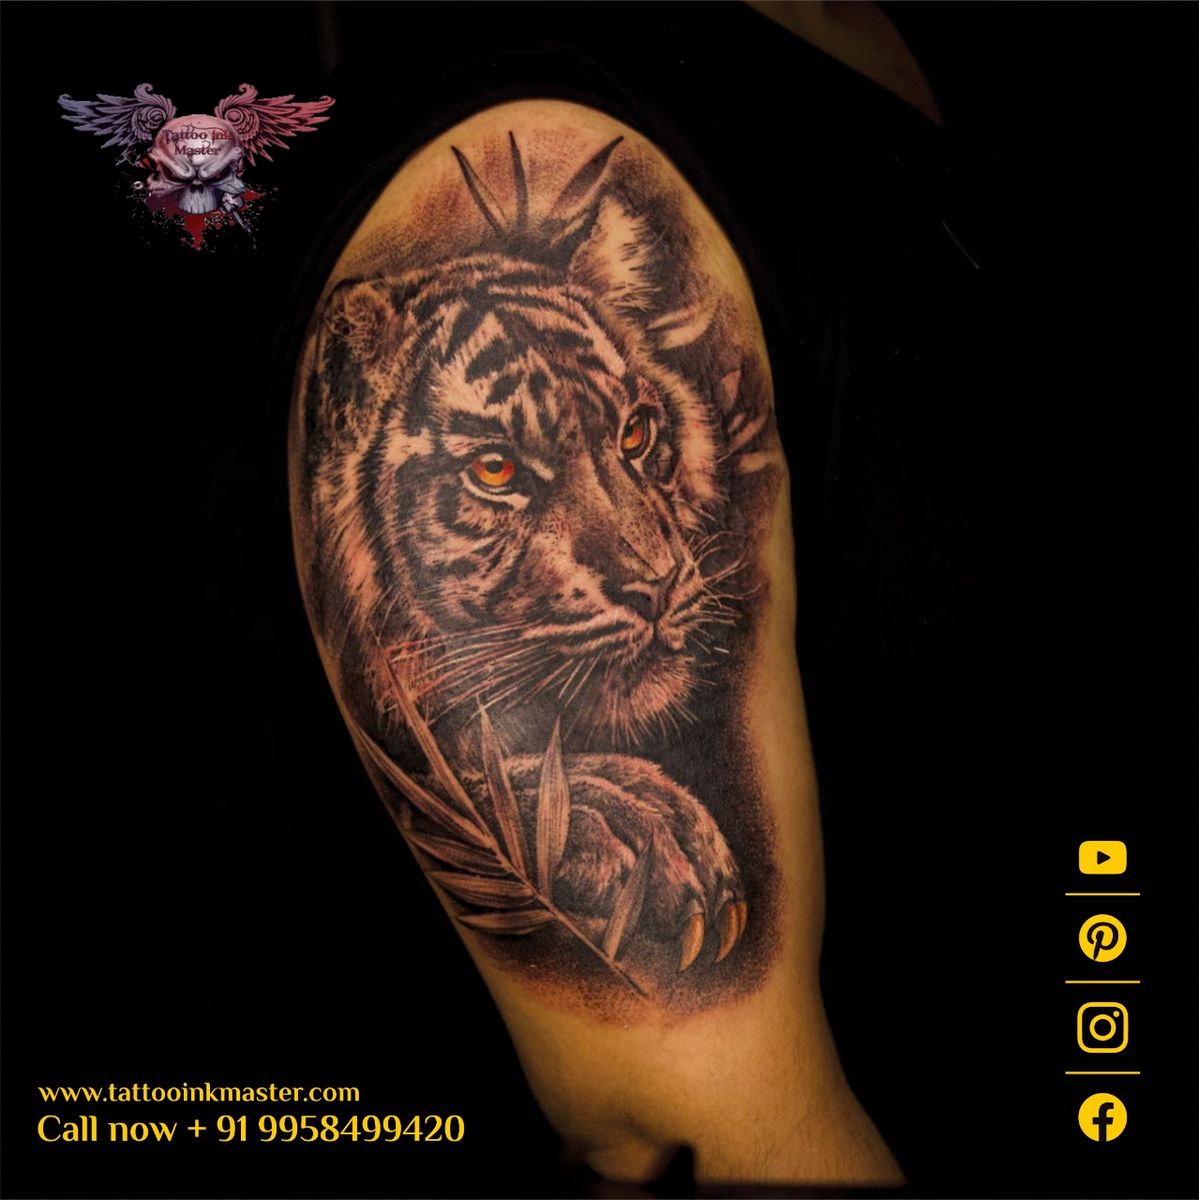 Intricate Japanese Tiger Tattoo